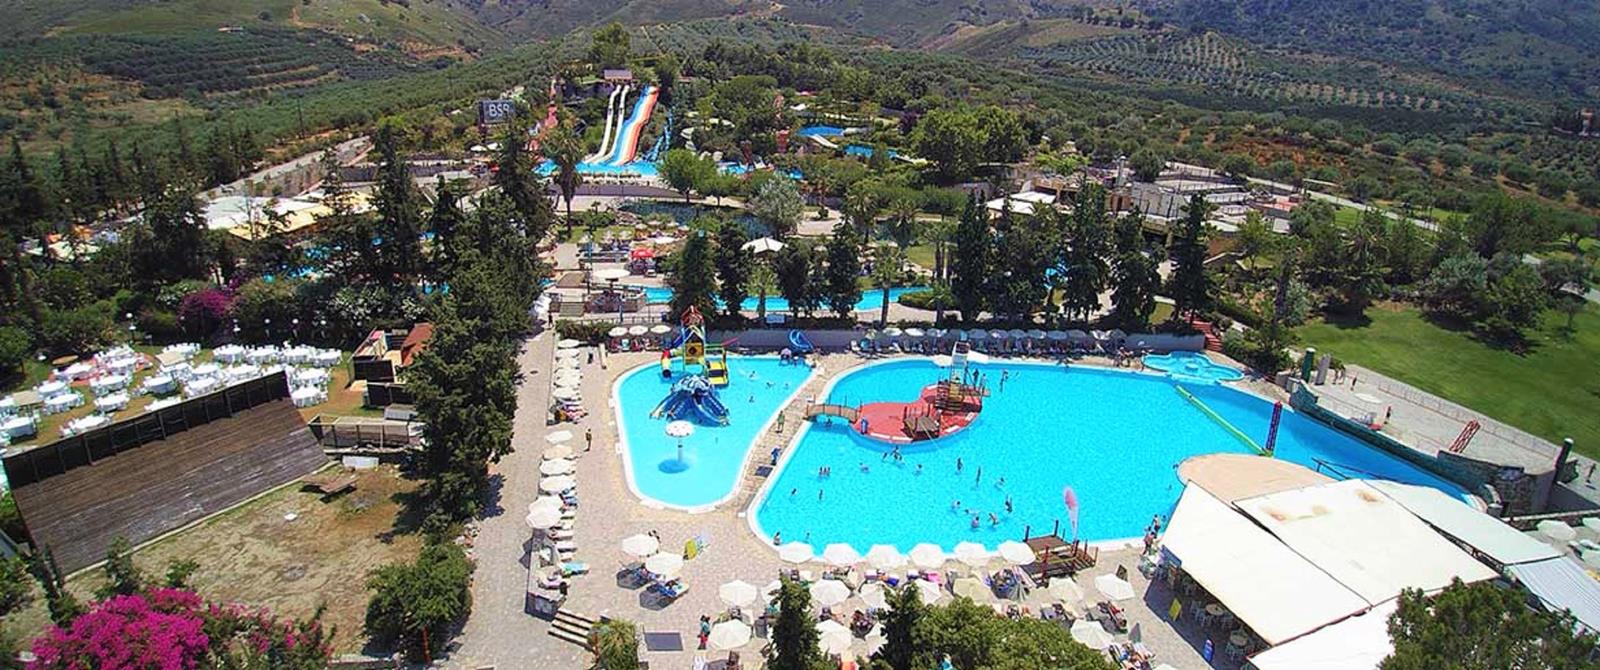 sightseeing chania | Zorbas Beach Village Hotel | Chania, Crete